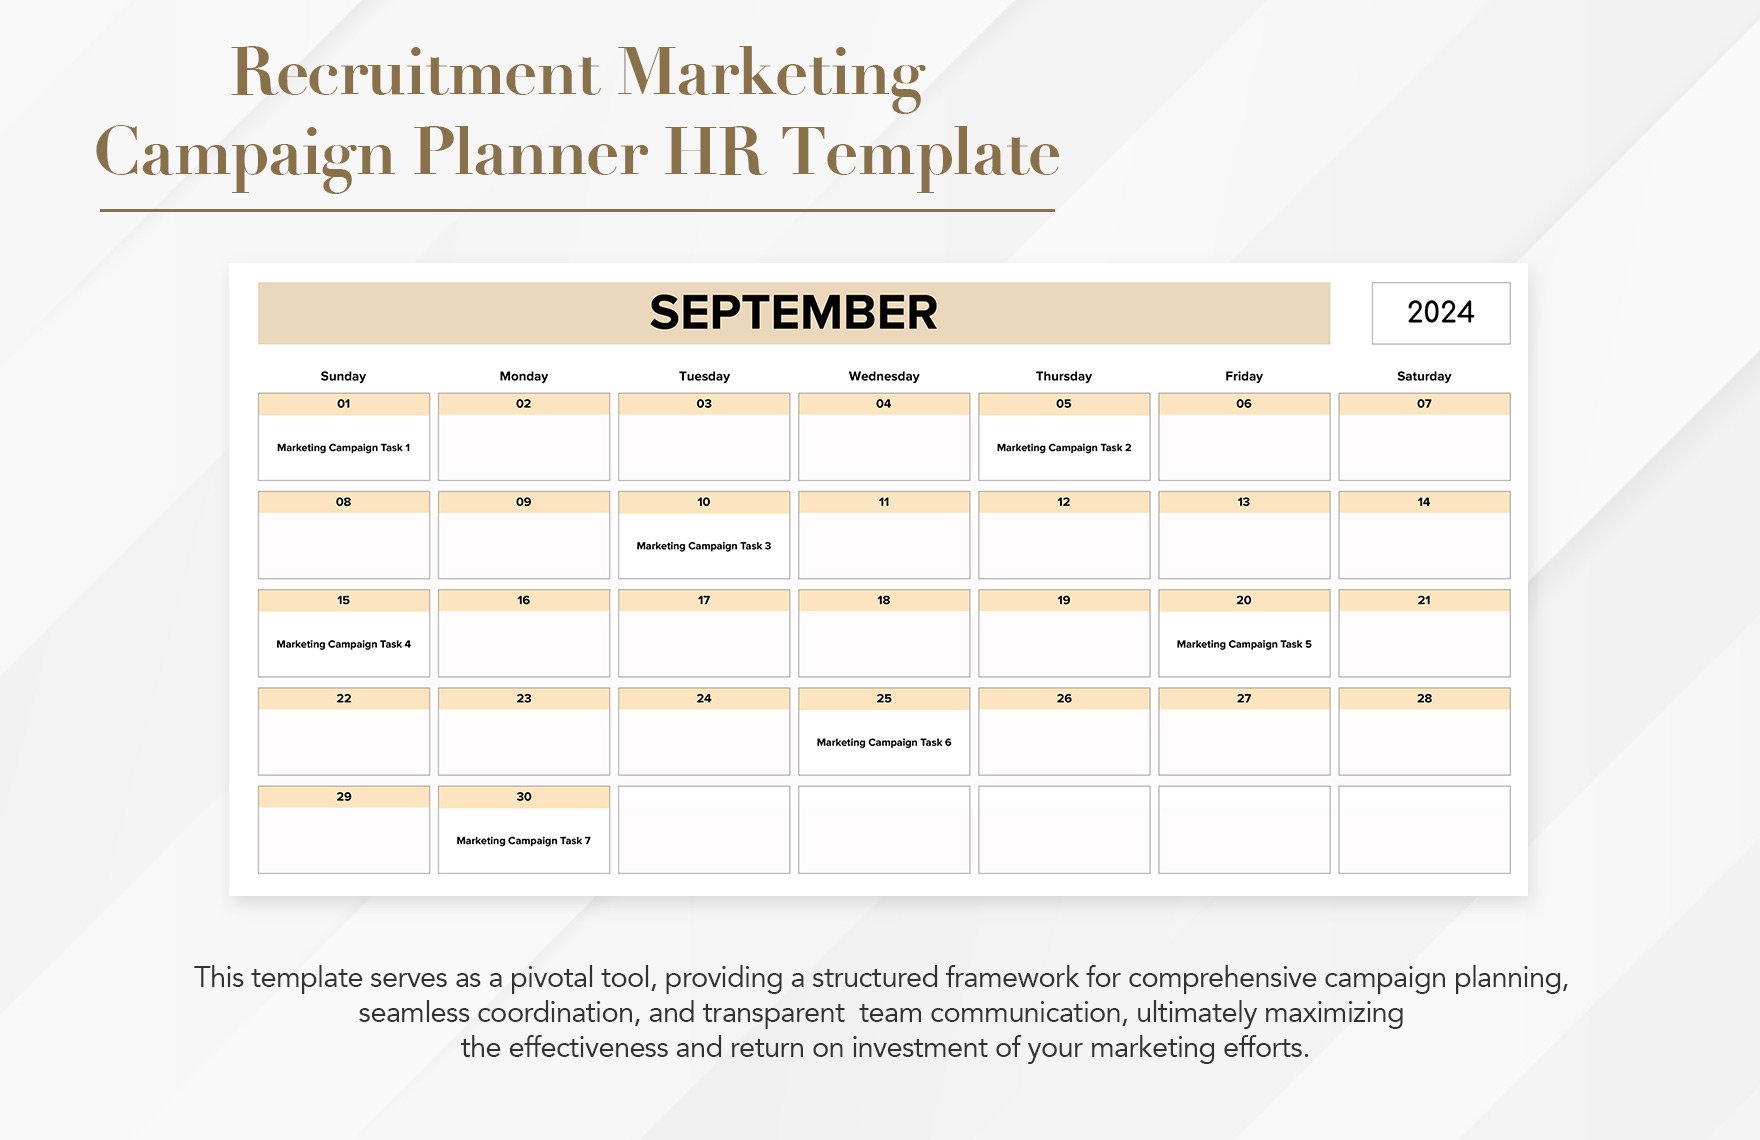 Recruitment Marketing Campaign Planner HR Template